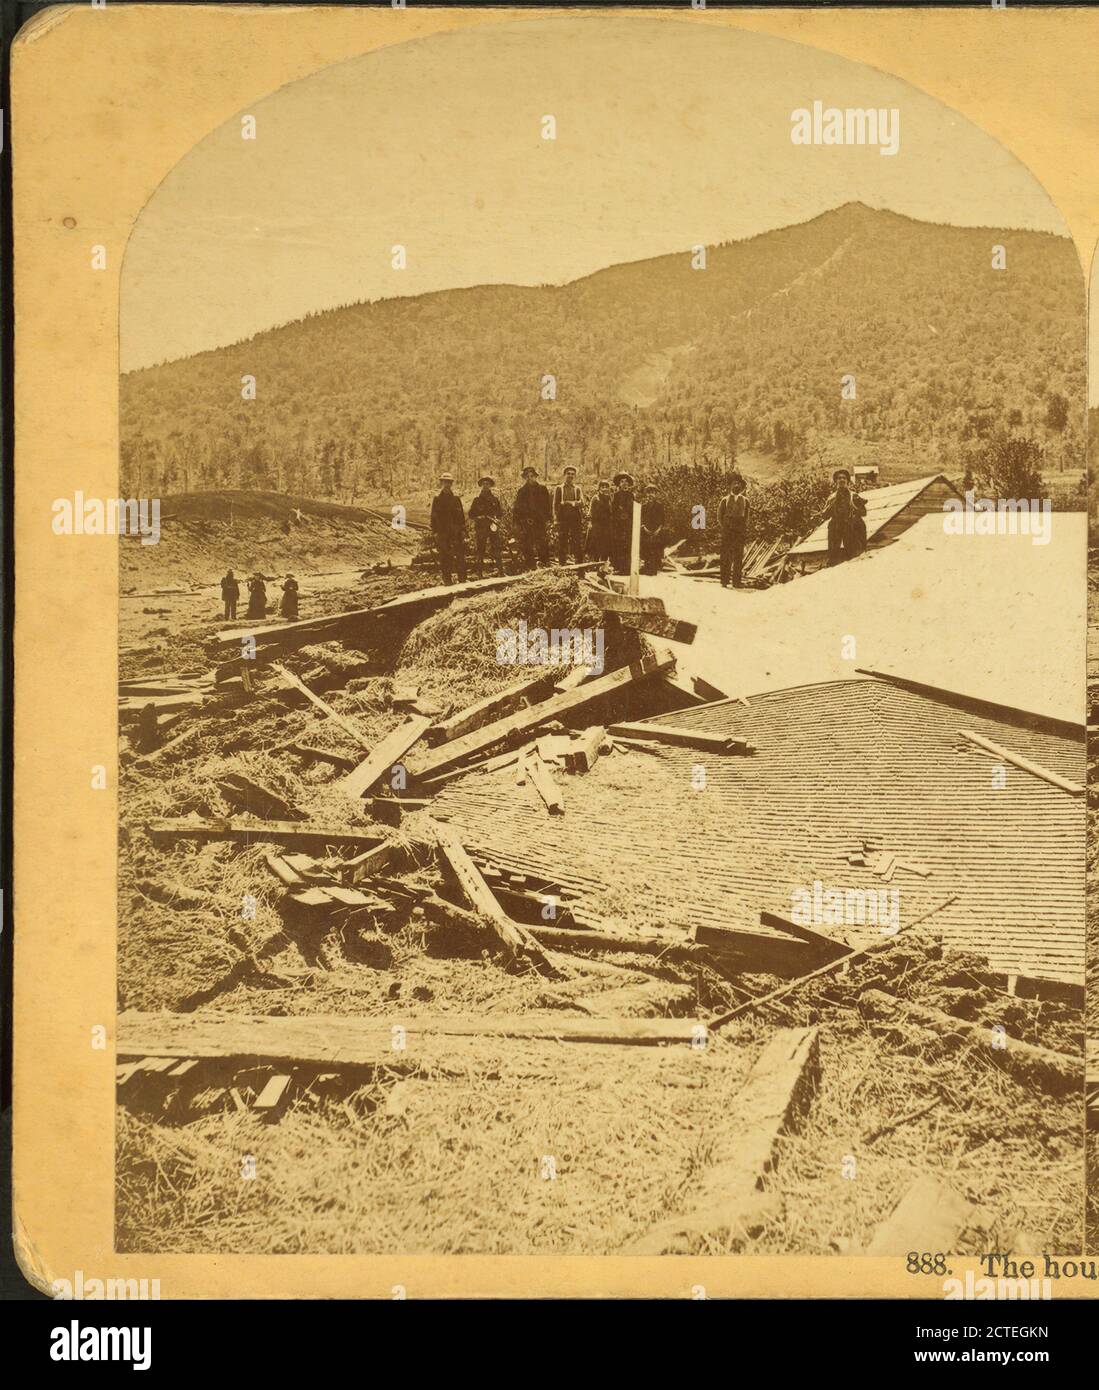 La Casa distrutta, Grande valanga, da Owl's Head, Jefferson., Kilburn, B. W. (Benjamin West) (1827-1909), Montagne, disastri, New Hampshire, Jefferson (N.H. Foto Stock